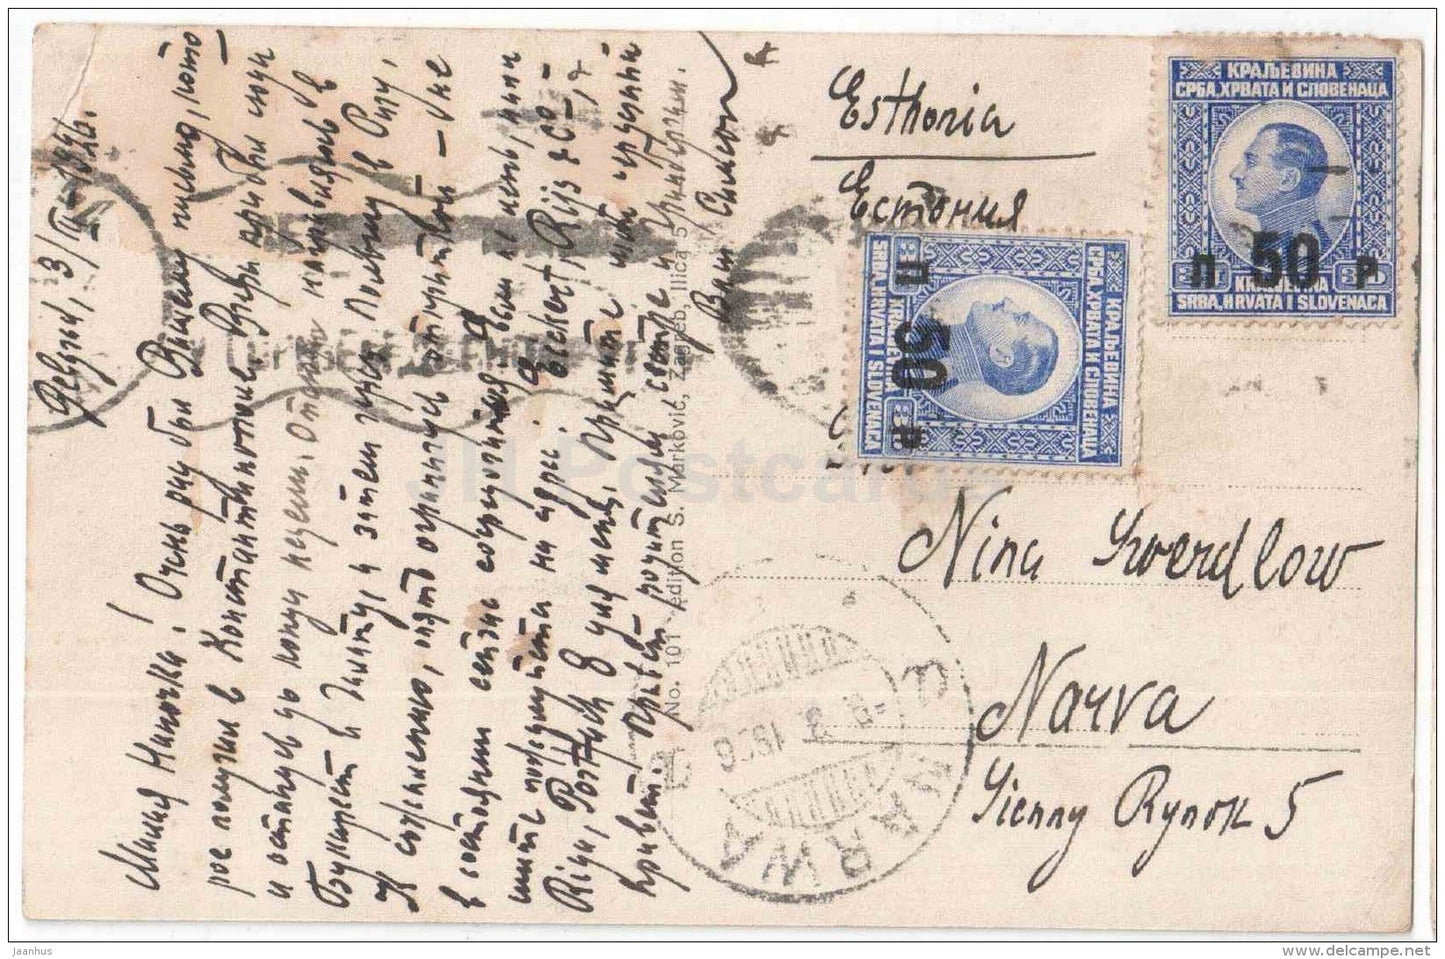 Academie de Science - Belgrad - Belgrade - Beograd - Serbia - sent from Serbia Belgradeto Estonia Narva 1926 - JH Postcards